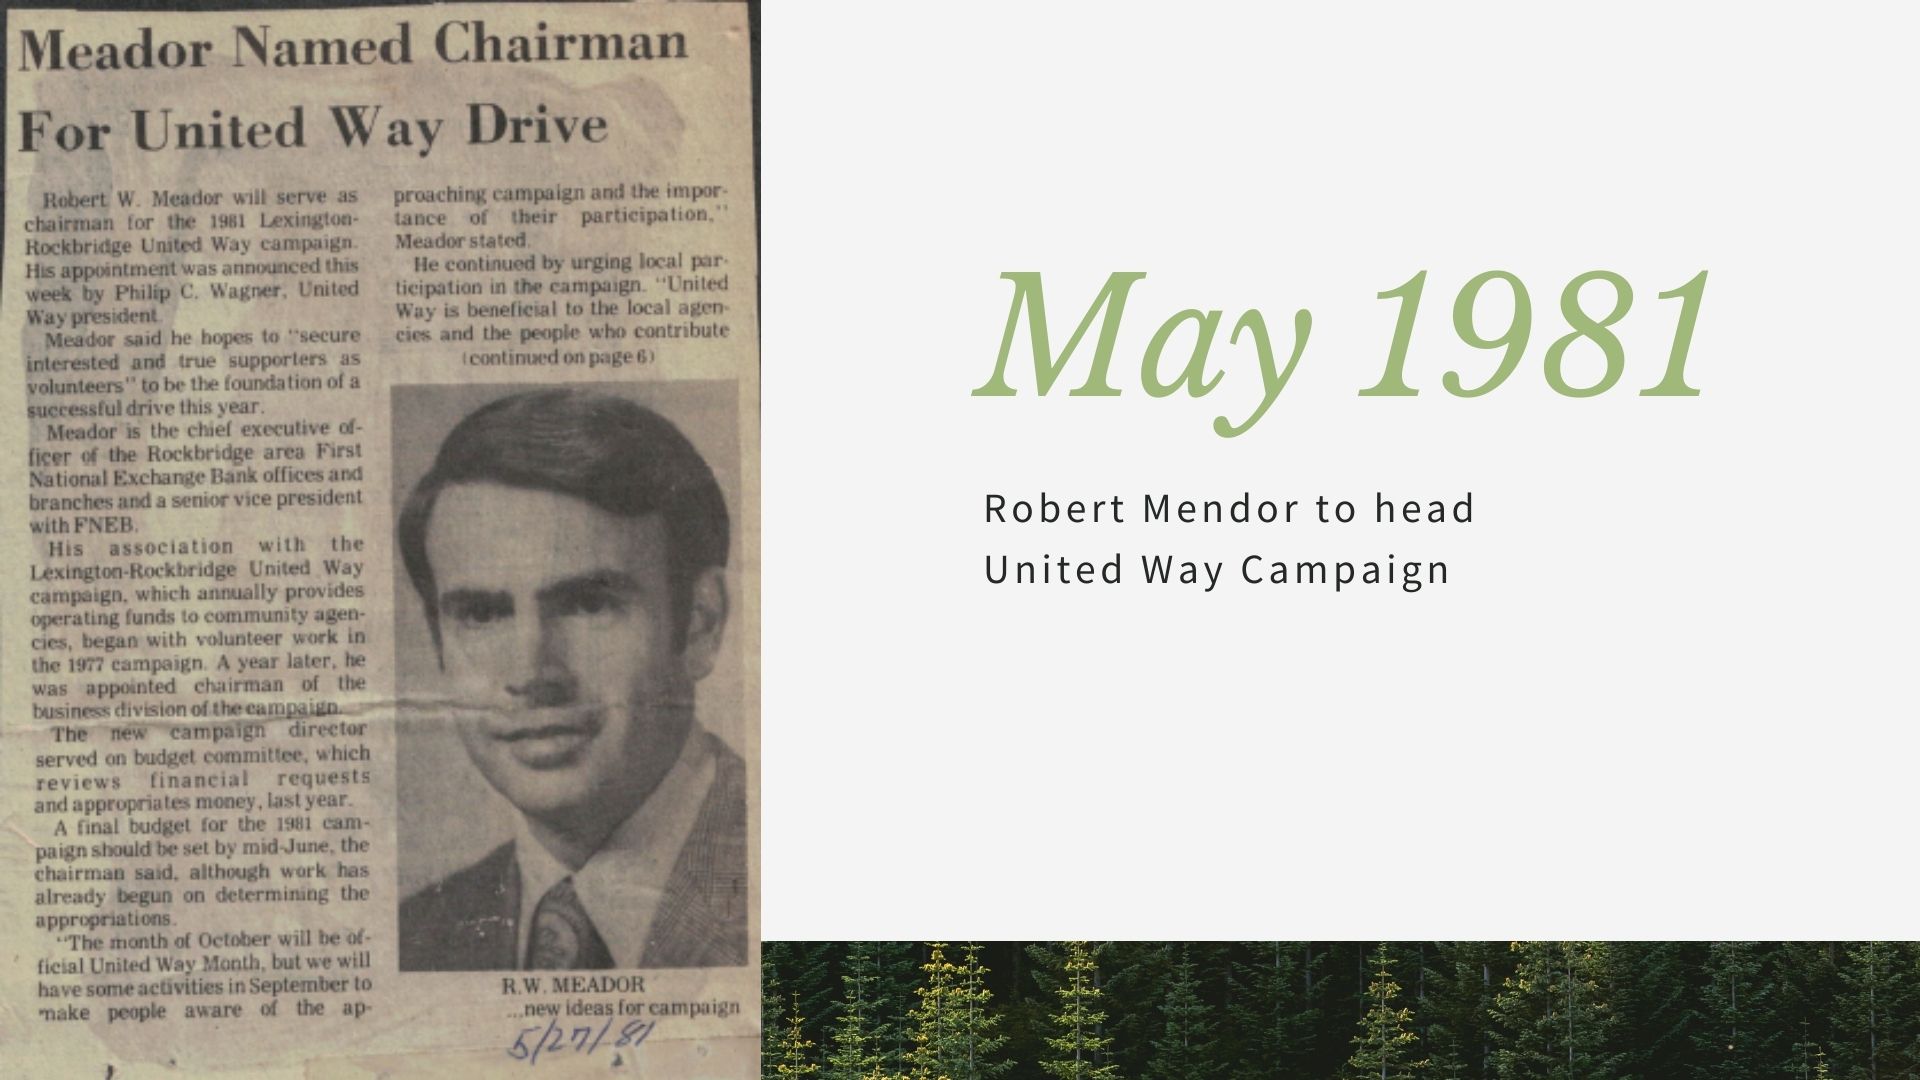 Robert Mendor to head United Way Campaign 1981